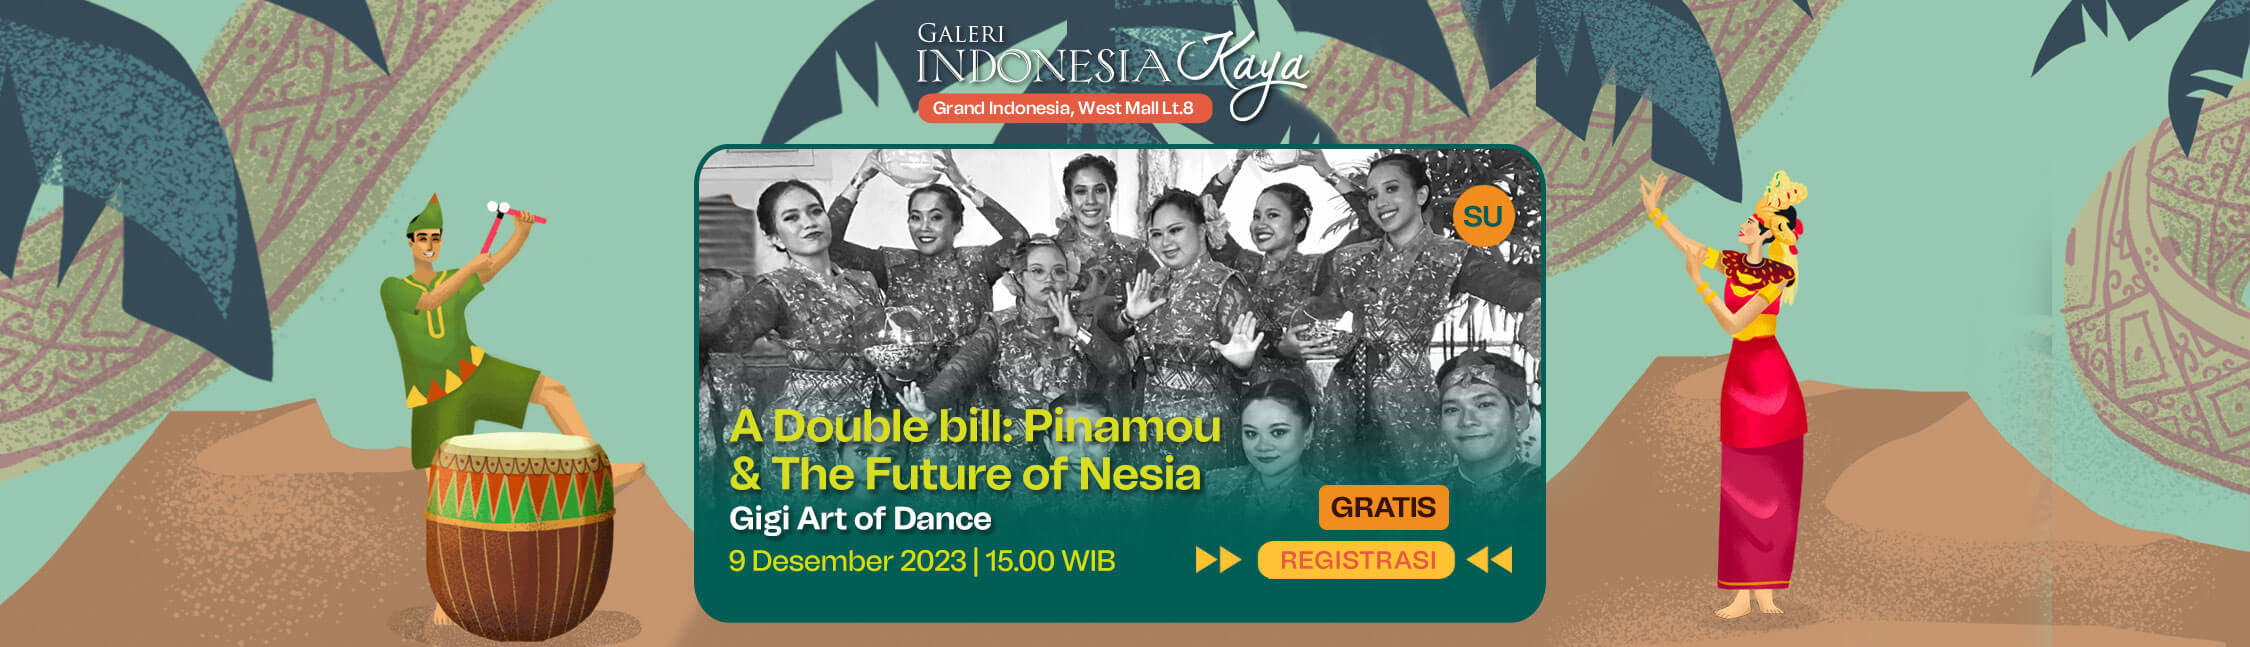 A Double bill: Pinamou & The Future of Nesia oleh Gigi Art of Dance